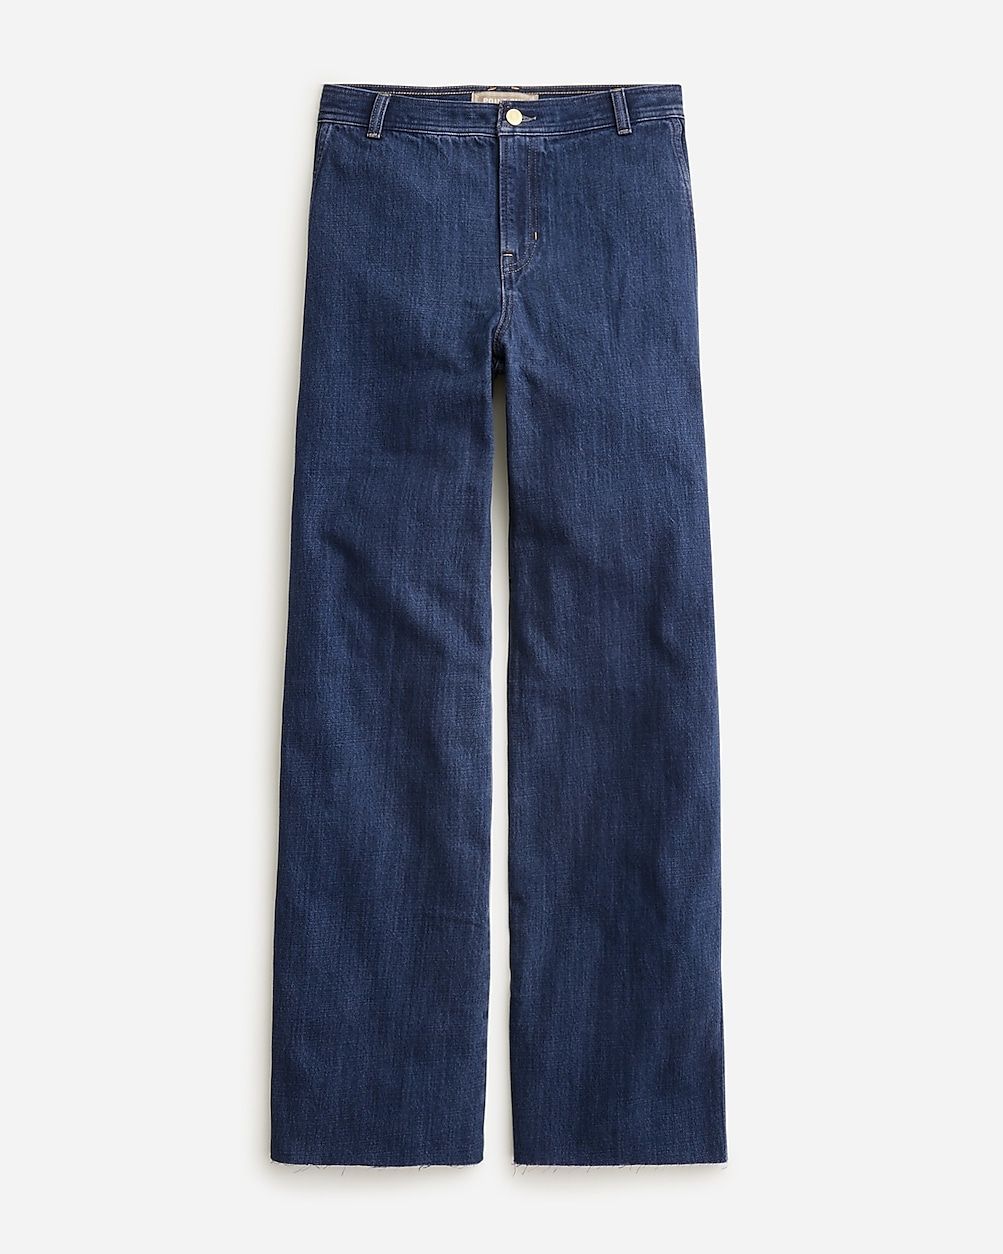 Point Sur vintage slim wide-leg jean in June wash | J.Crew US